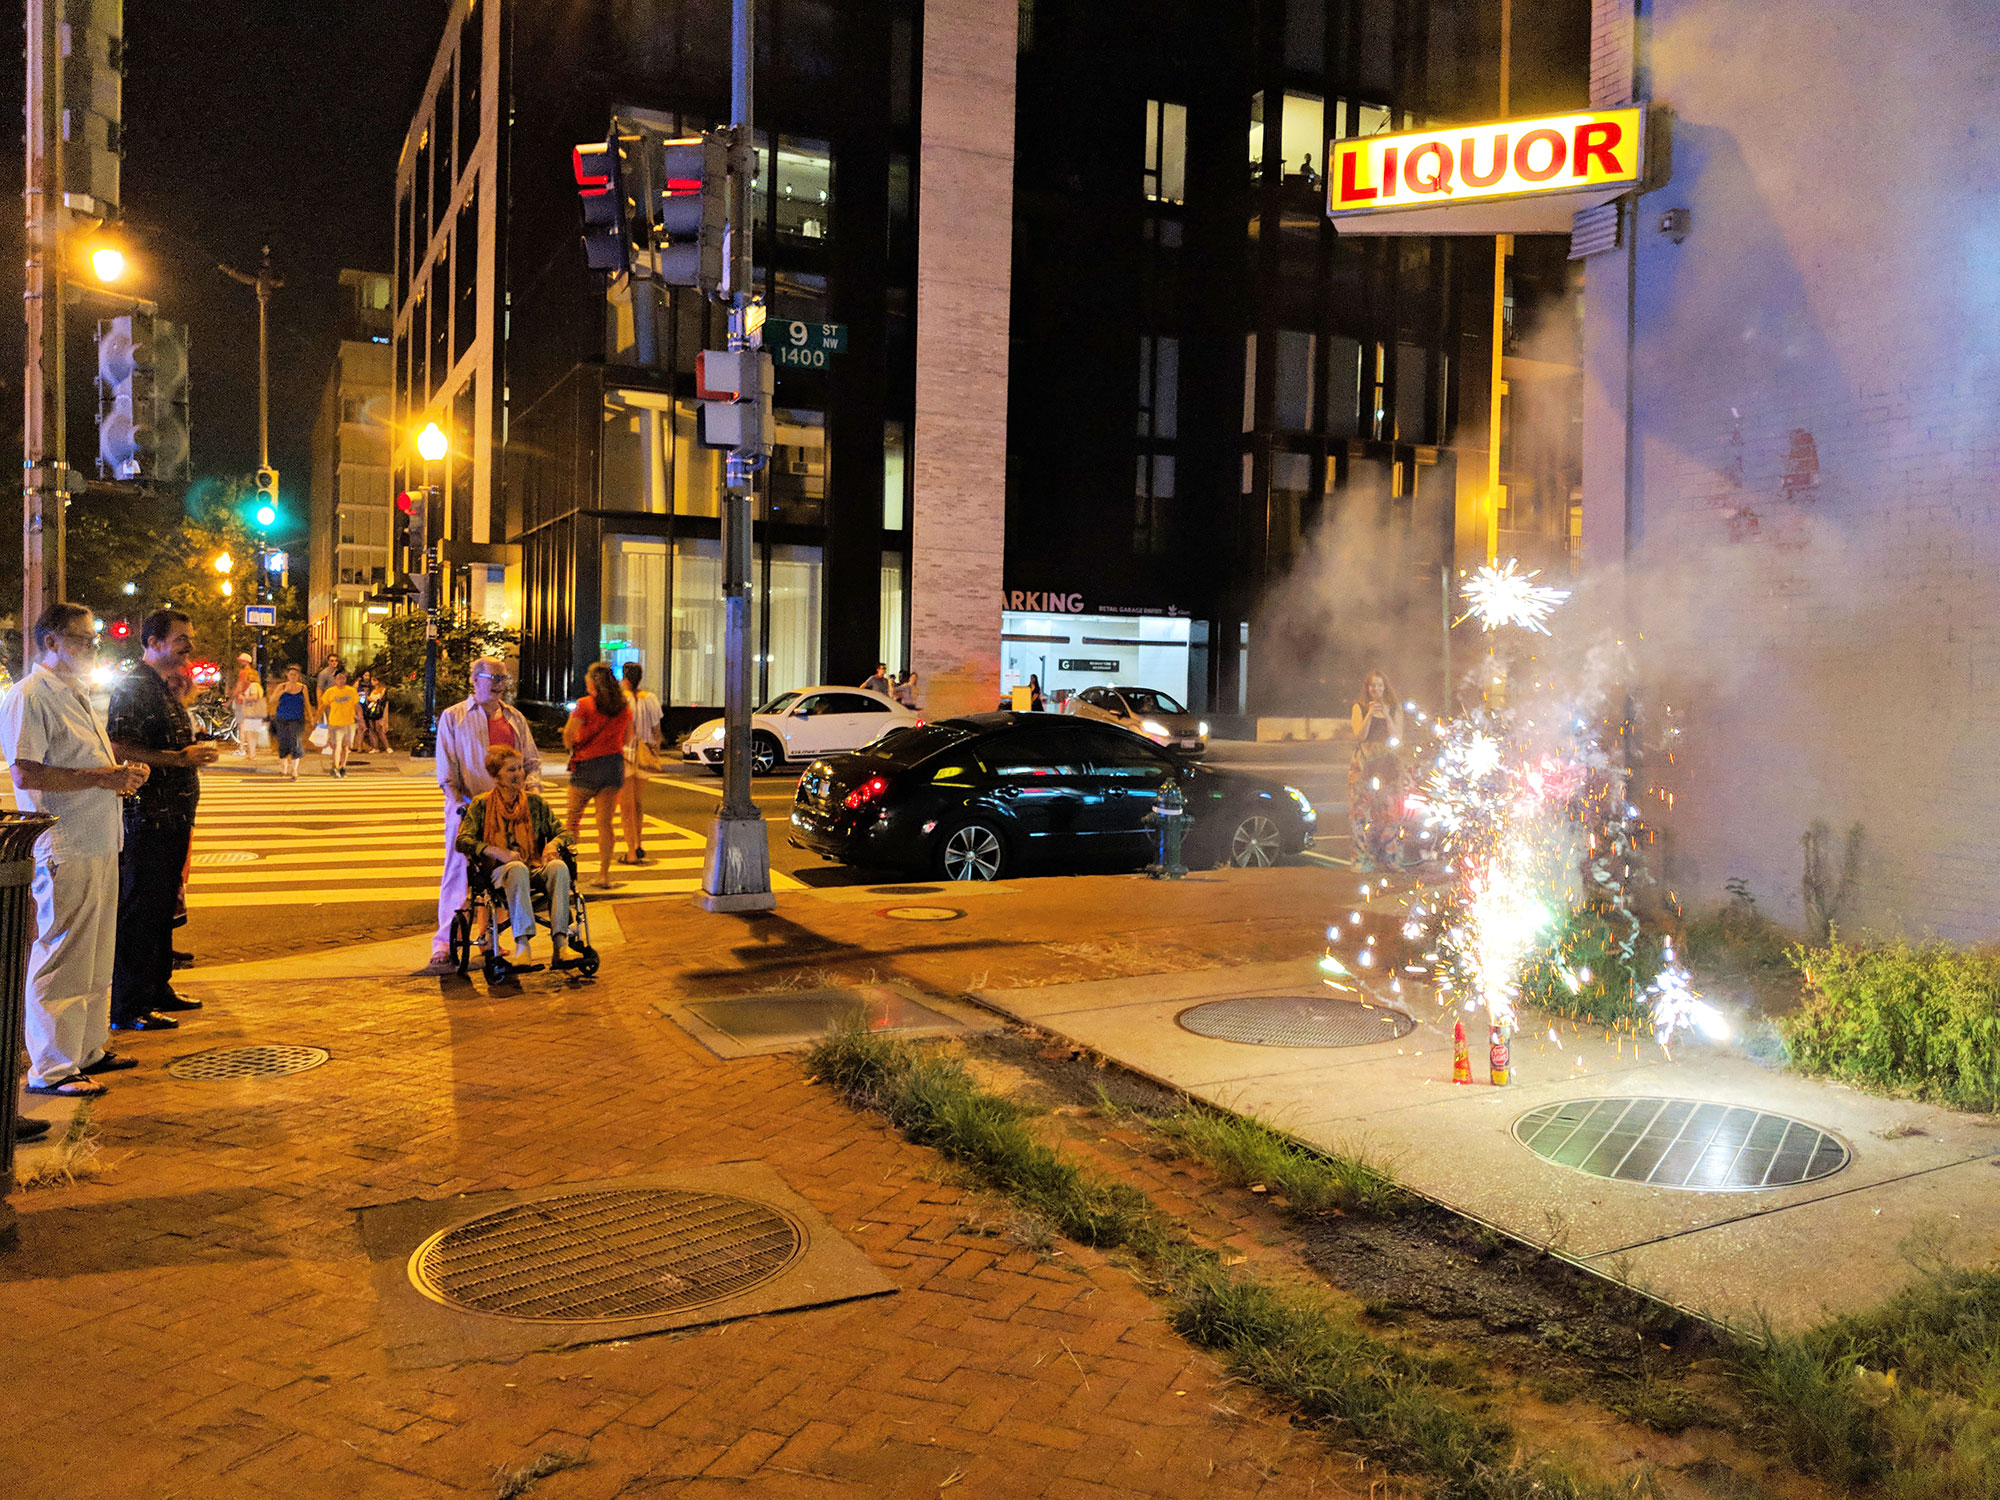 Fireworks in the Logan Circle neighborhood of Washington D.C.